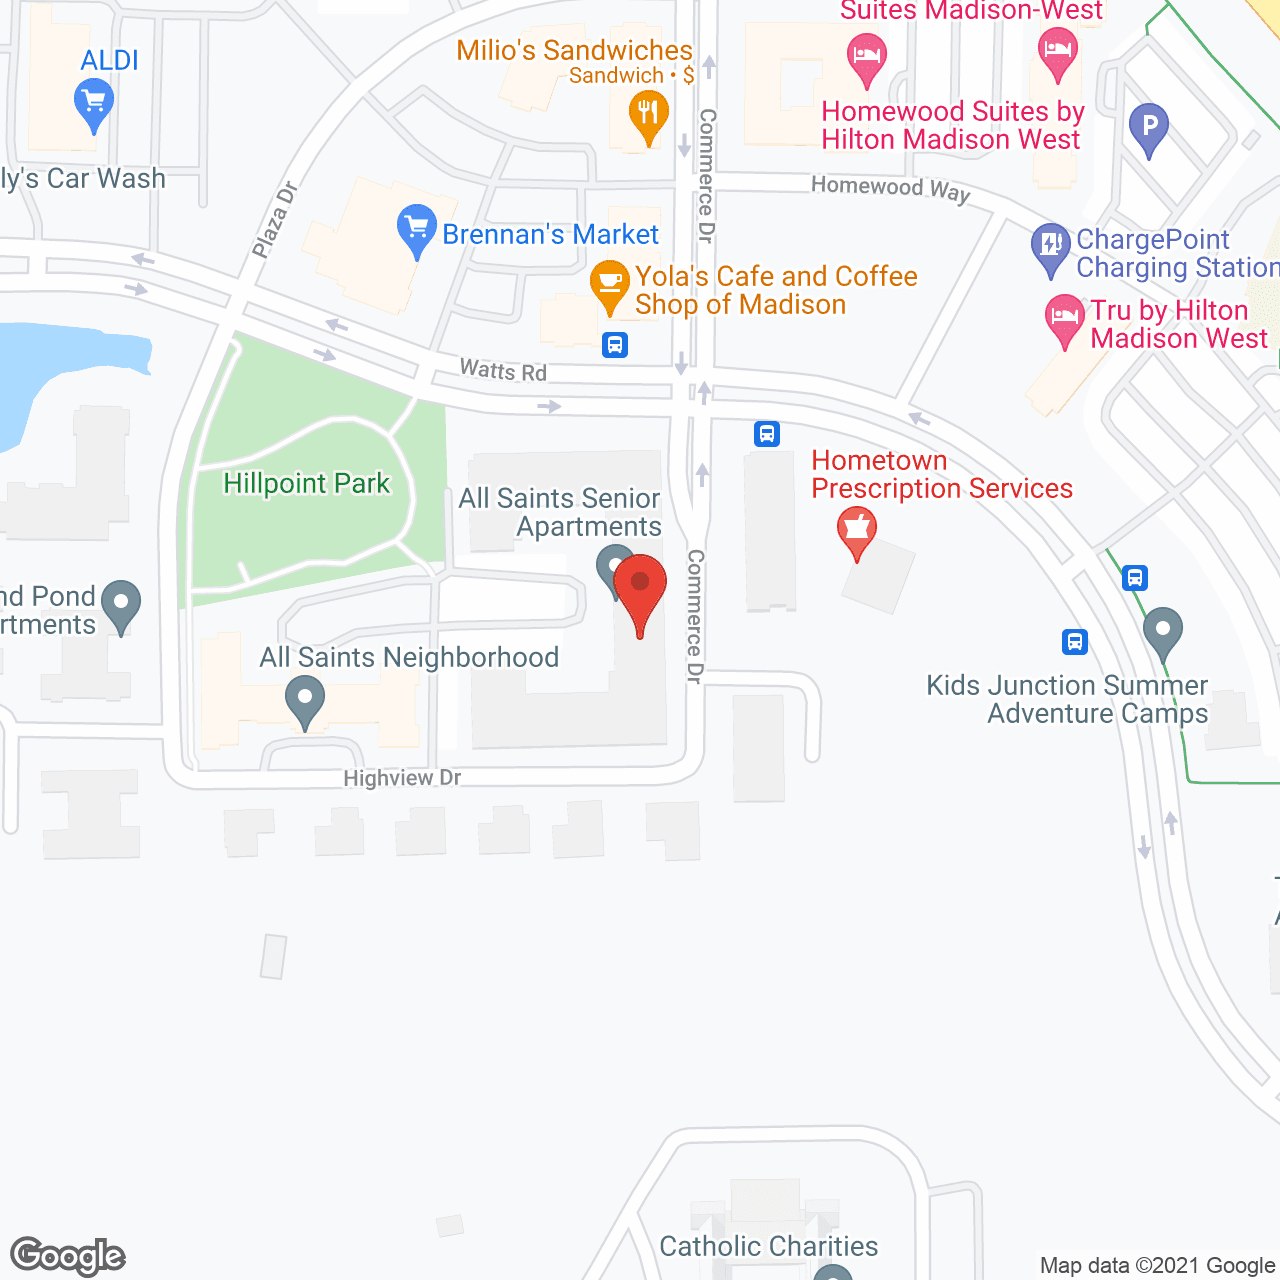 All Saints Retirement Center in google map